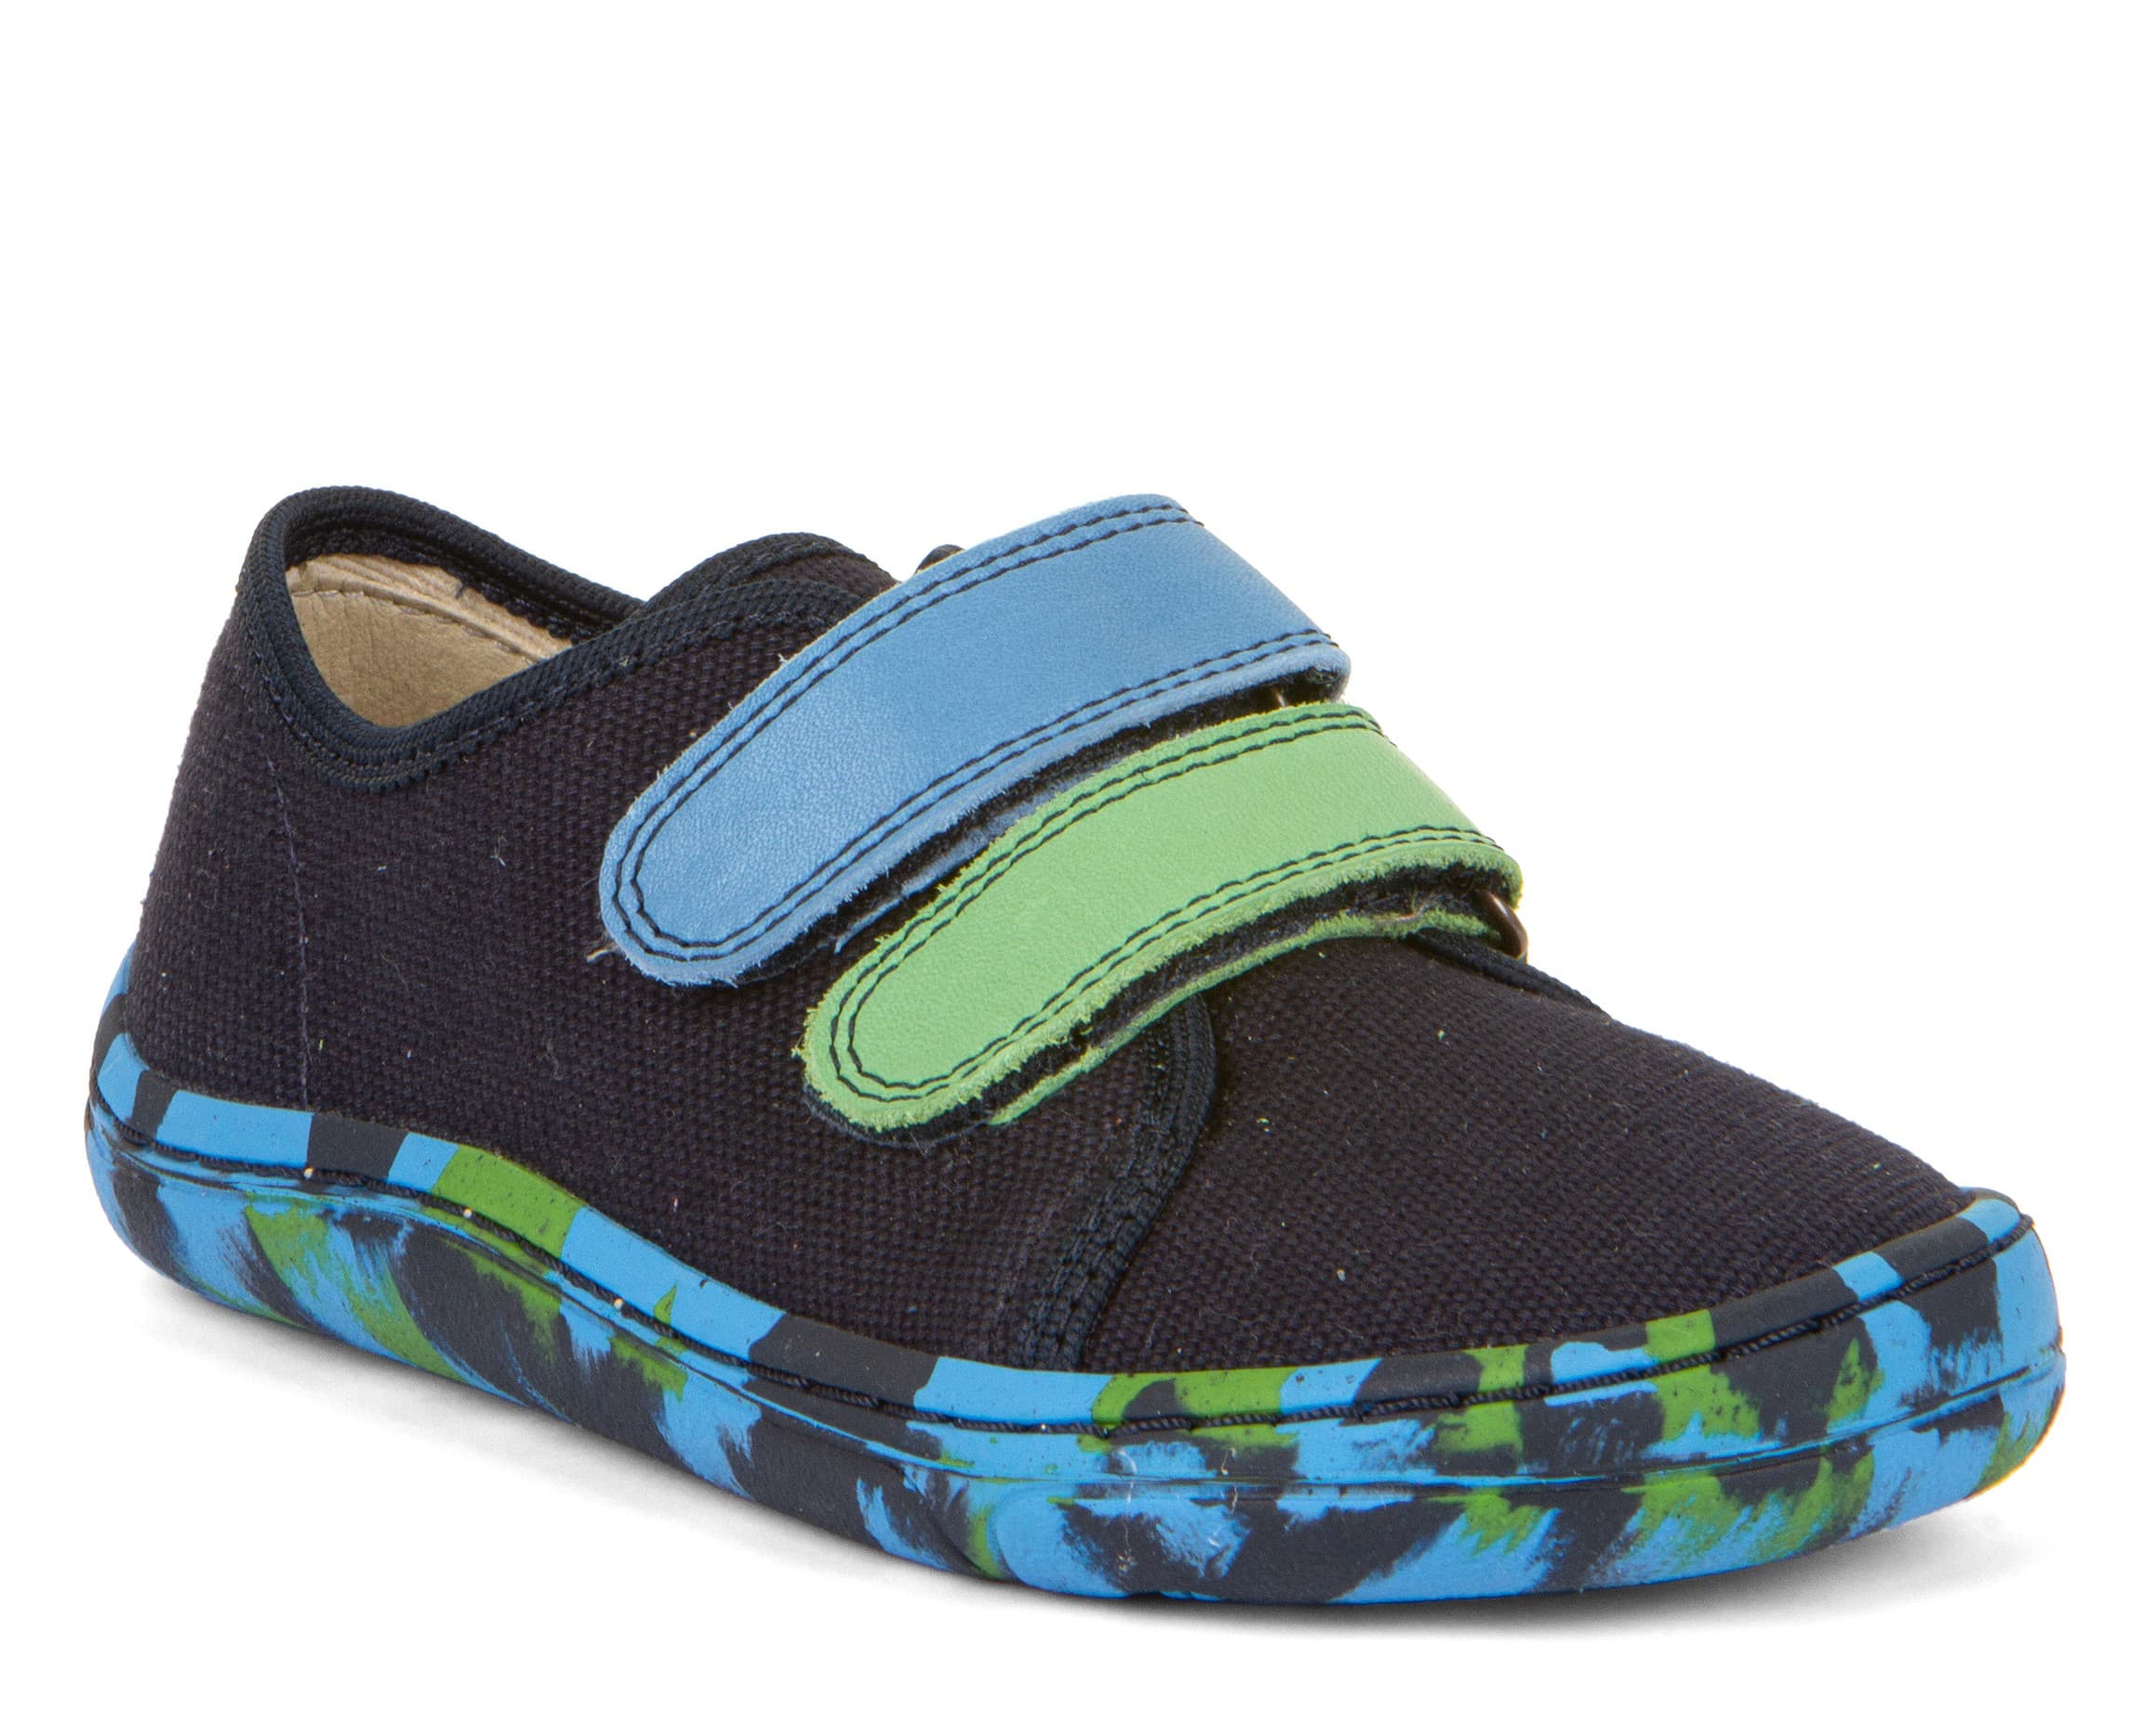 Barefoot tenisky Froddo Blue-Green textilní G1700379-13 Velikost: 21